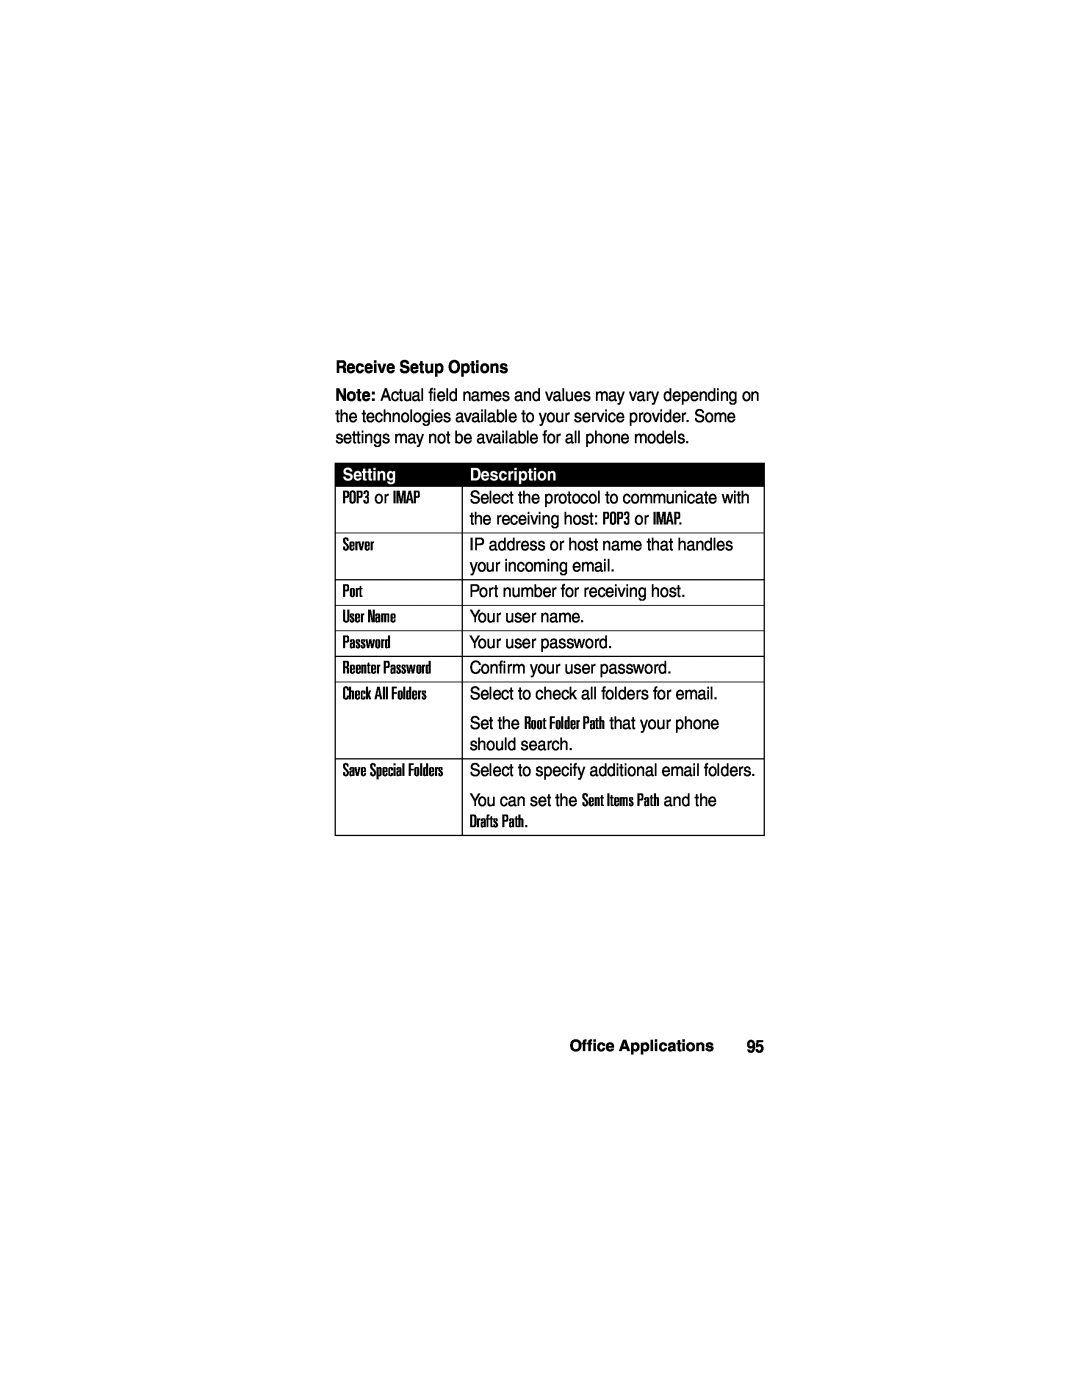 Motorola A780 manual Receive Setup Options, Setting, Description, Check All Folders 